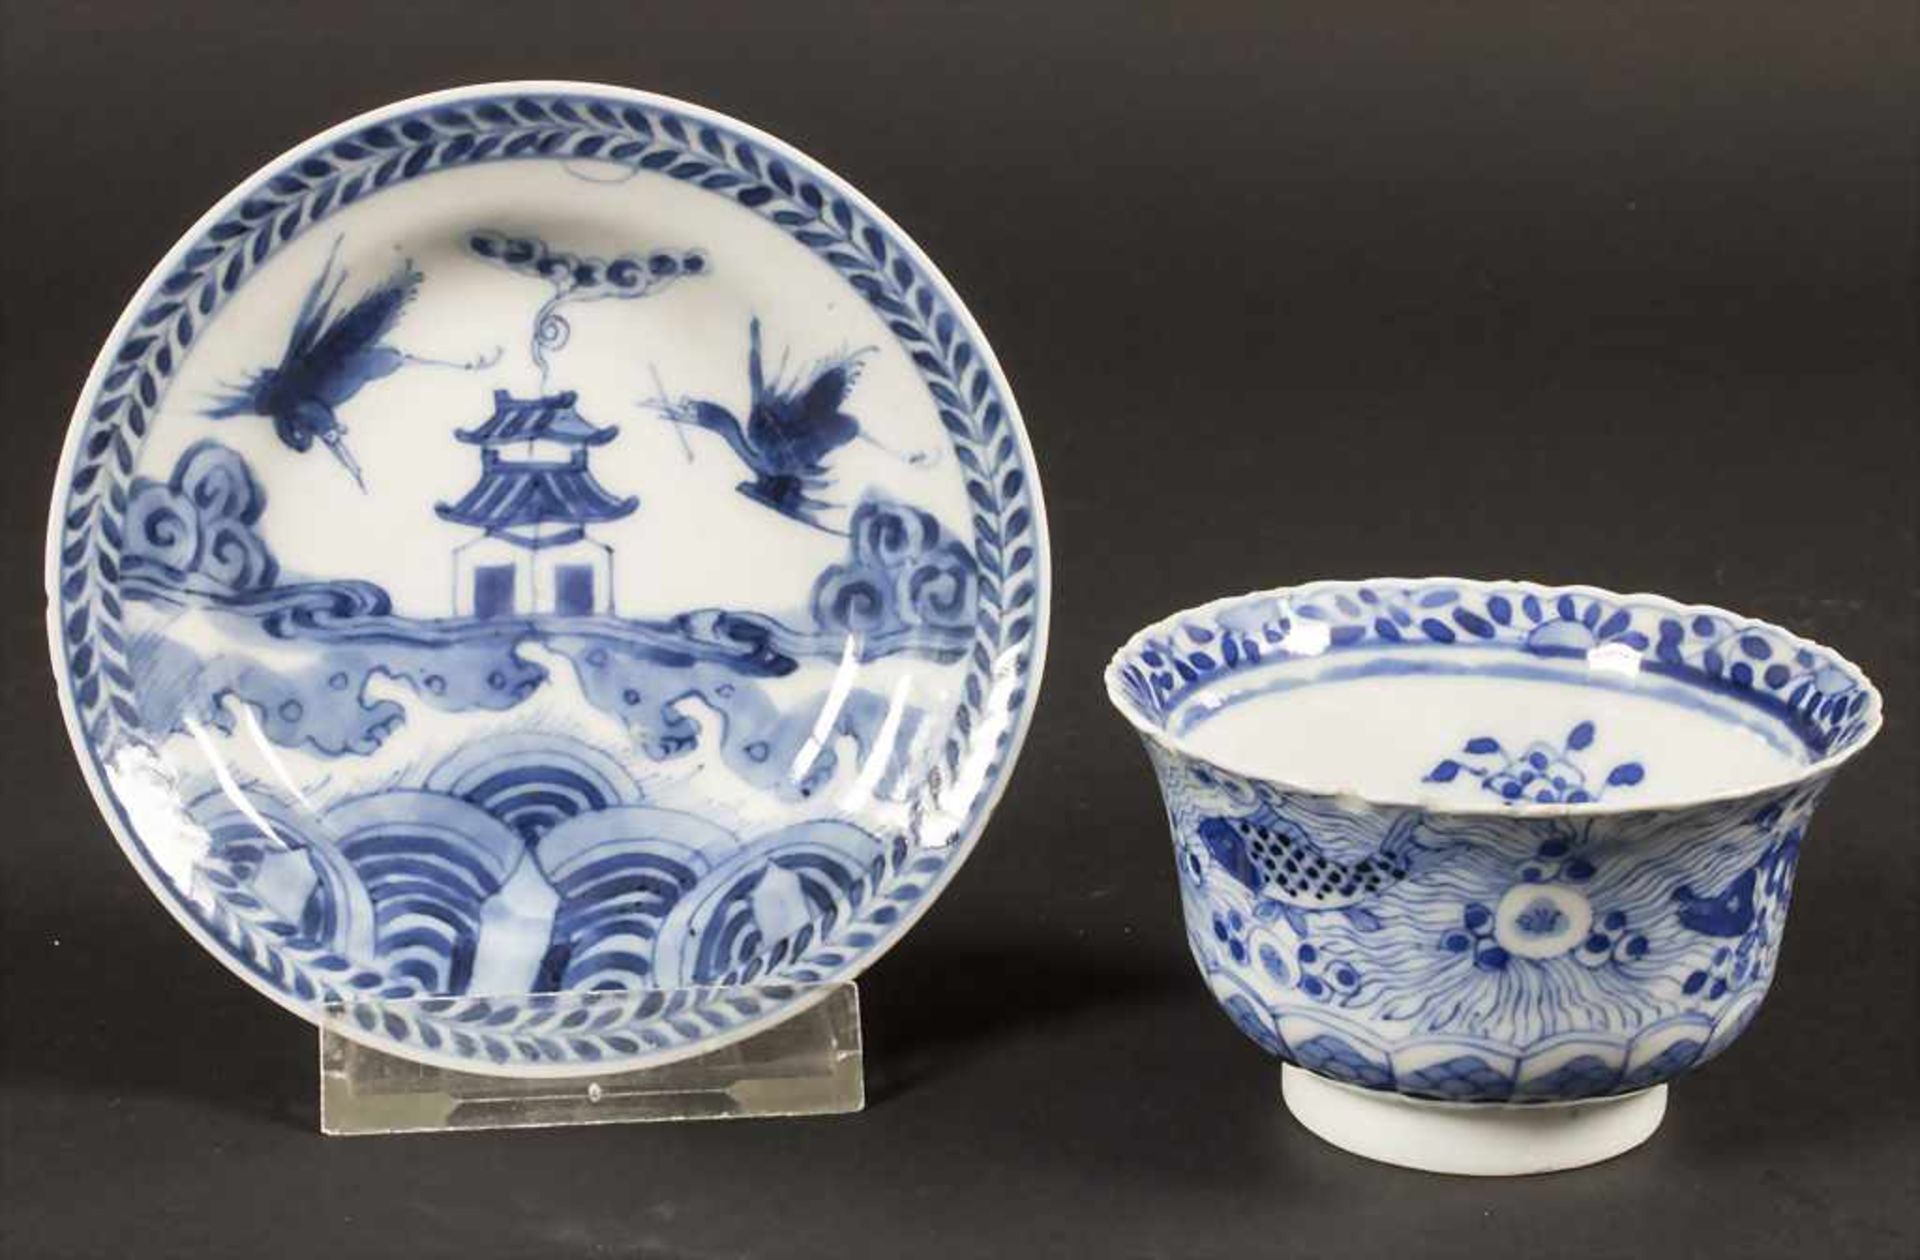 Kumme mit Unterteller / A porcelain bowl with saucer, China, Qing-Dynastie (1644-1911), Kangxi-